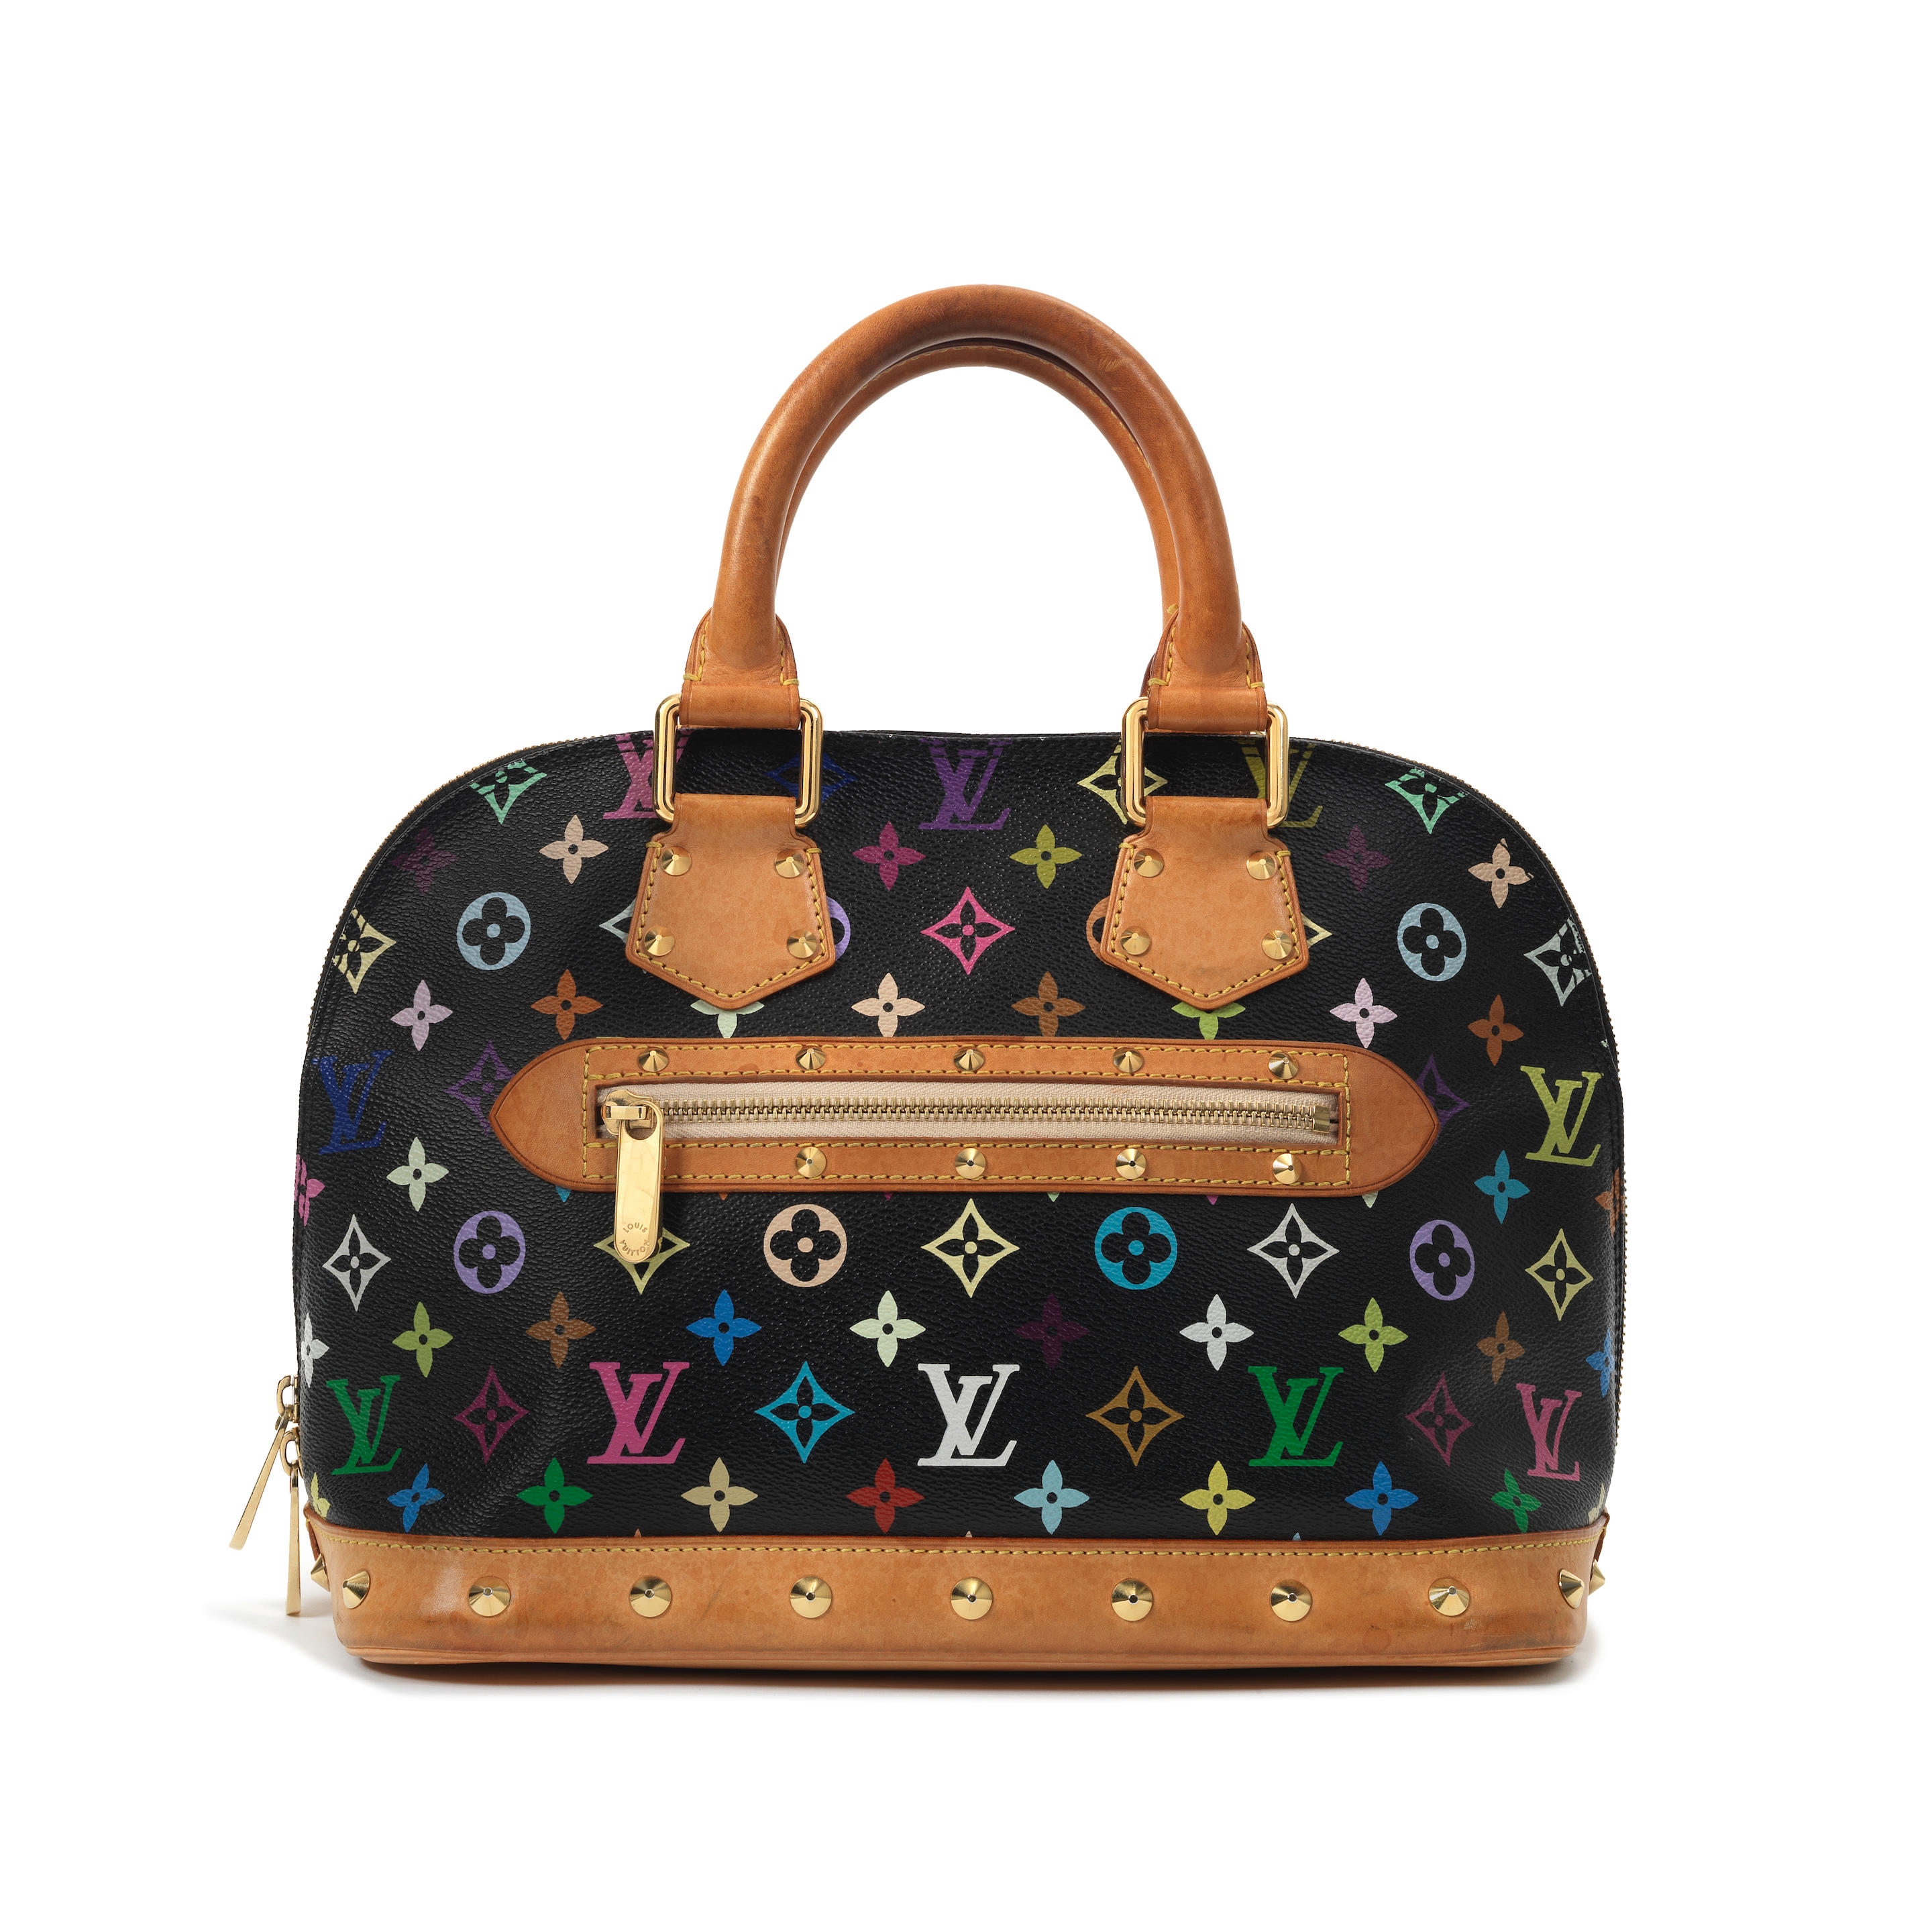 At Auction: Louis Vuitton, Louis Vuitton Alma PM Takashi Murakami handbag,  Paris